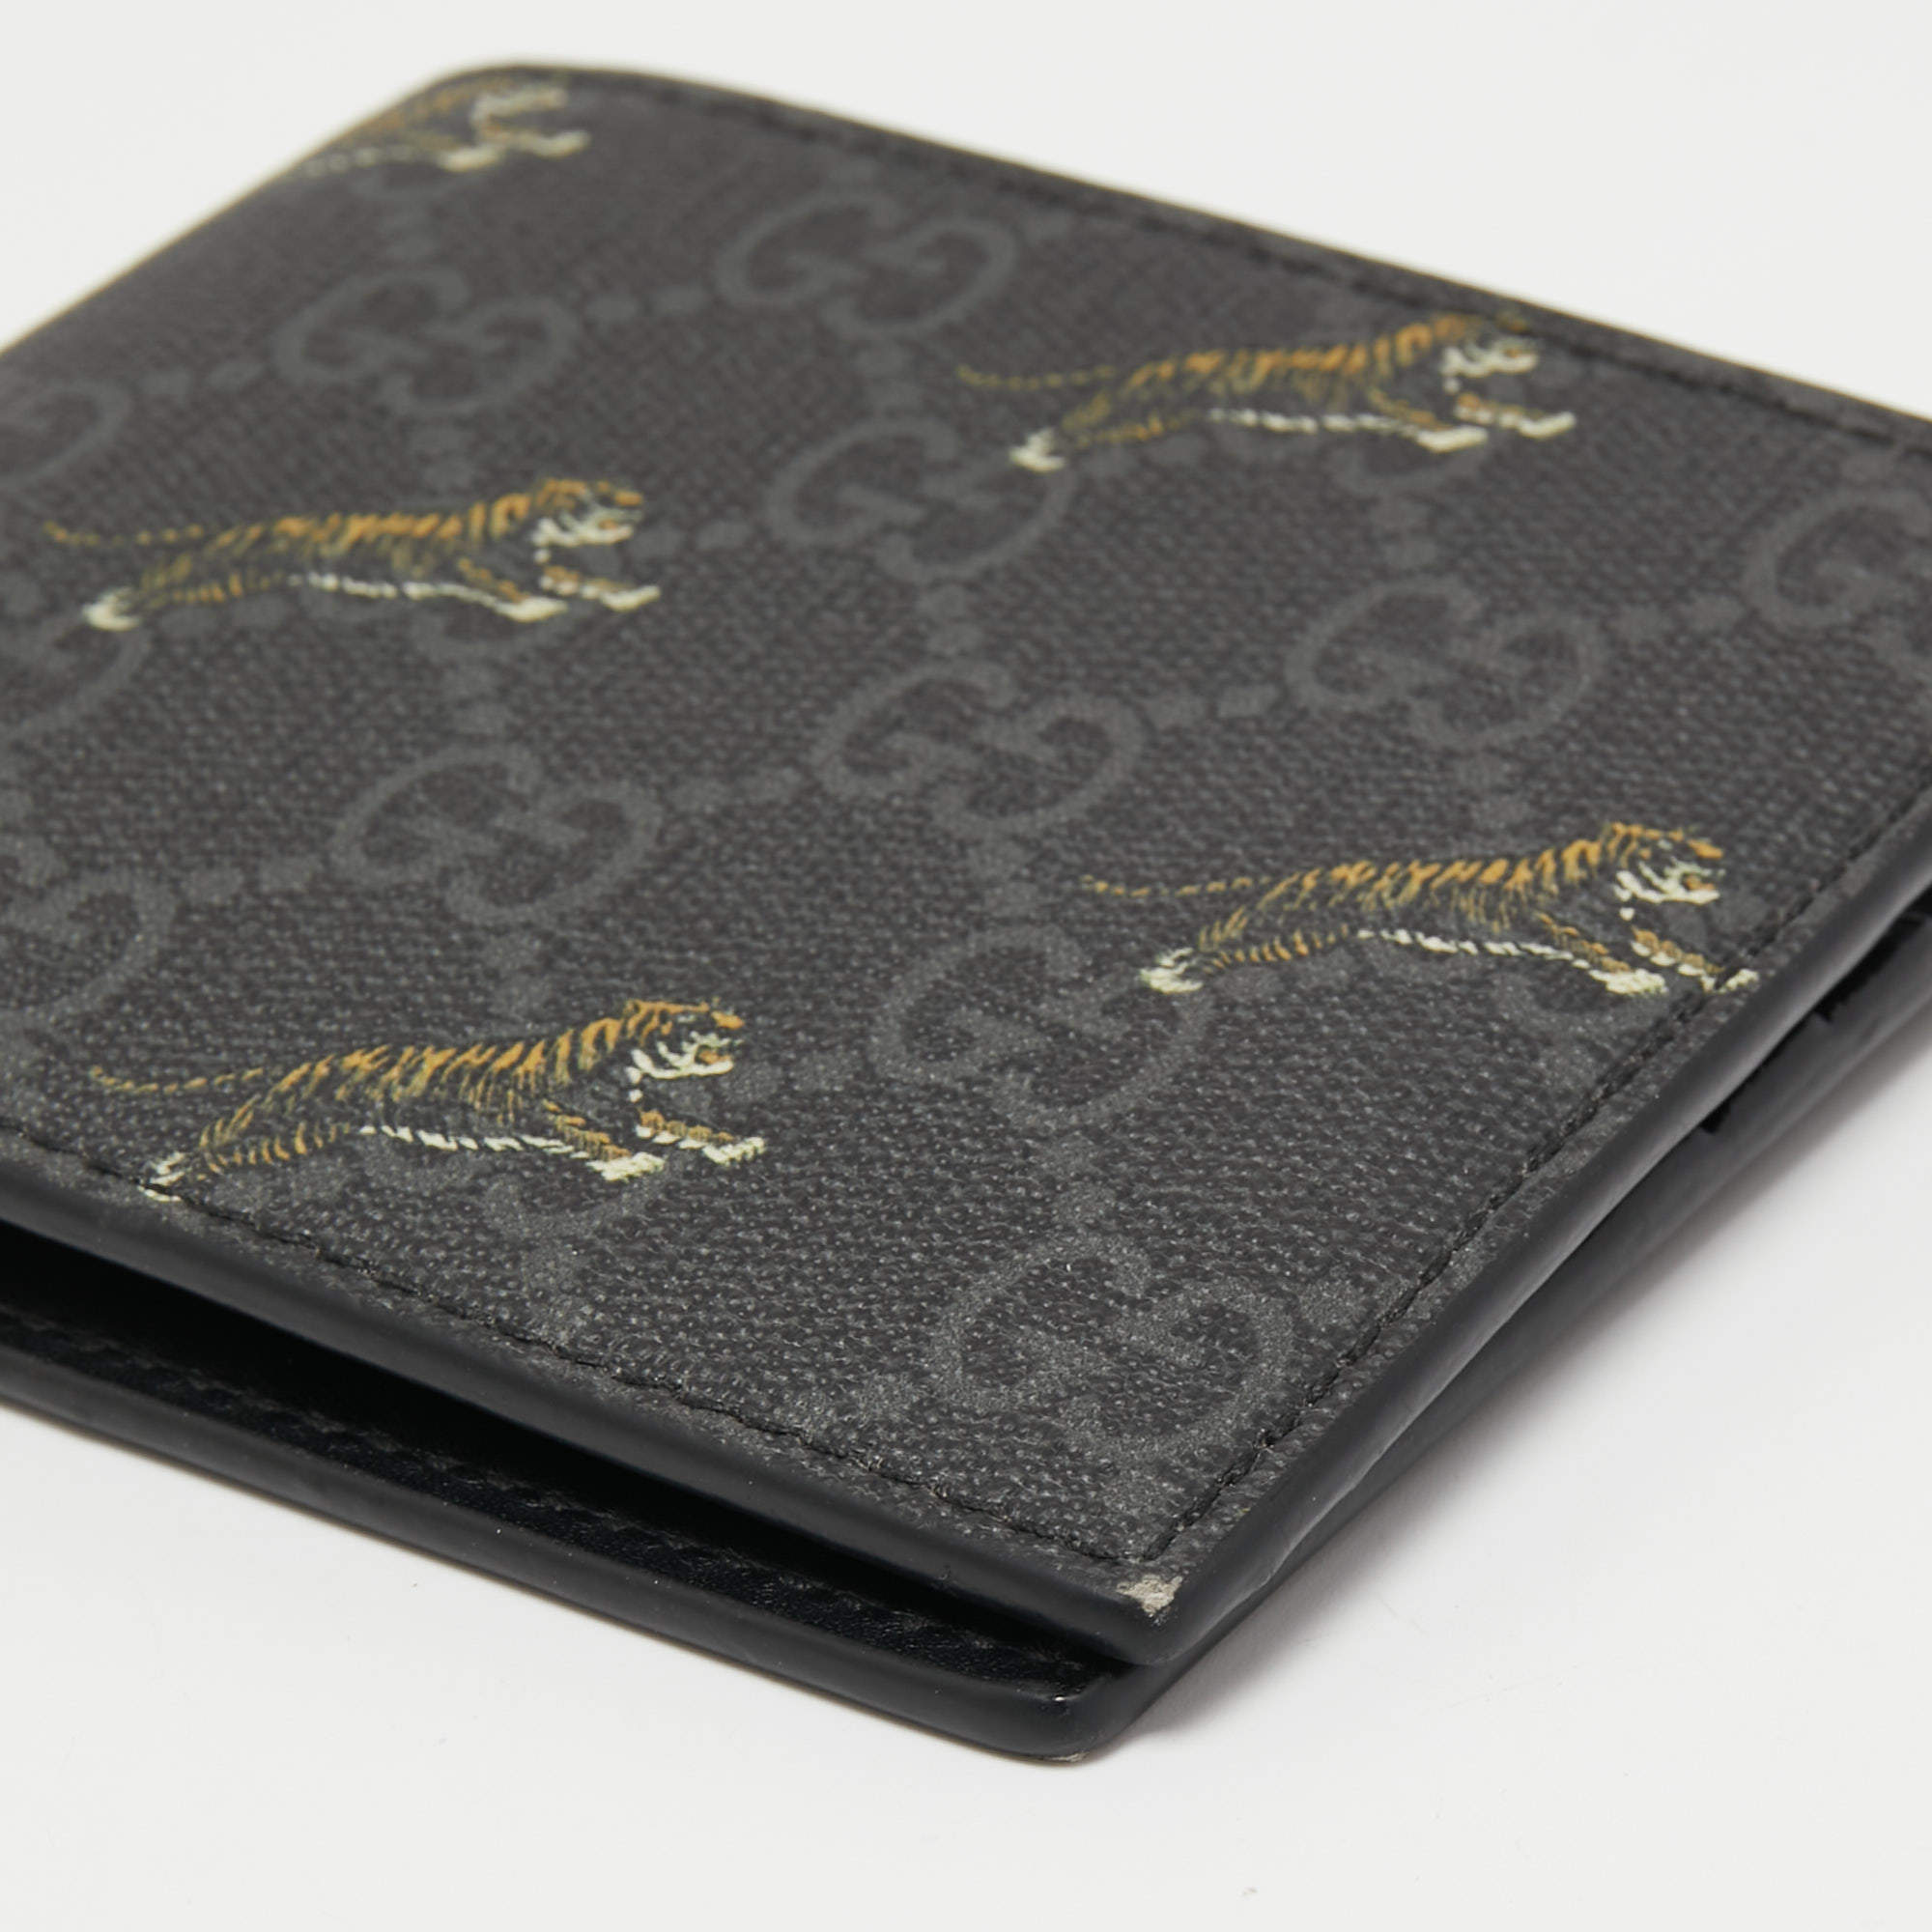 Gucci GG Supreme Canvas Grey Tiger Print Zip Around Wallet 575135 – Queen  Bee of Beverly Hills